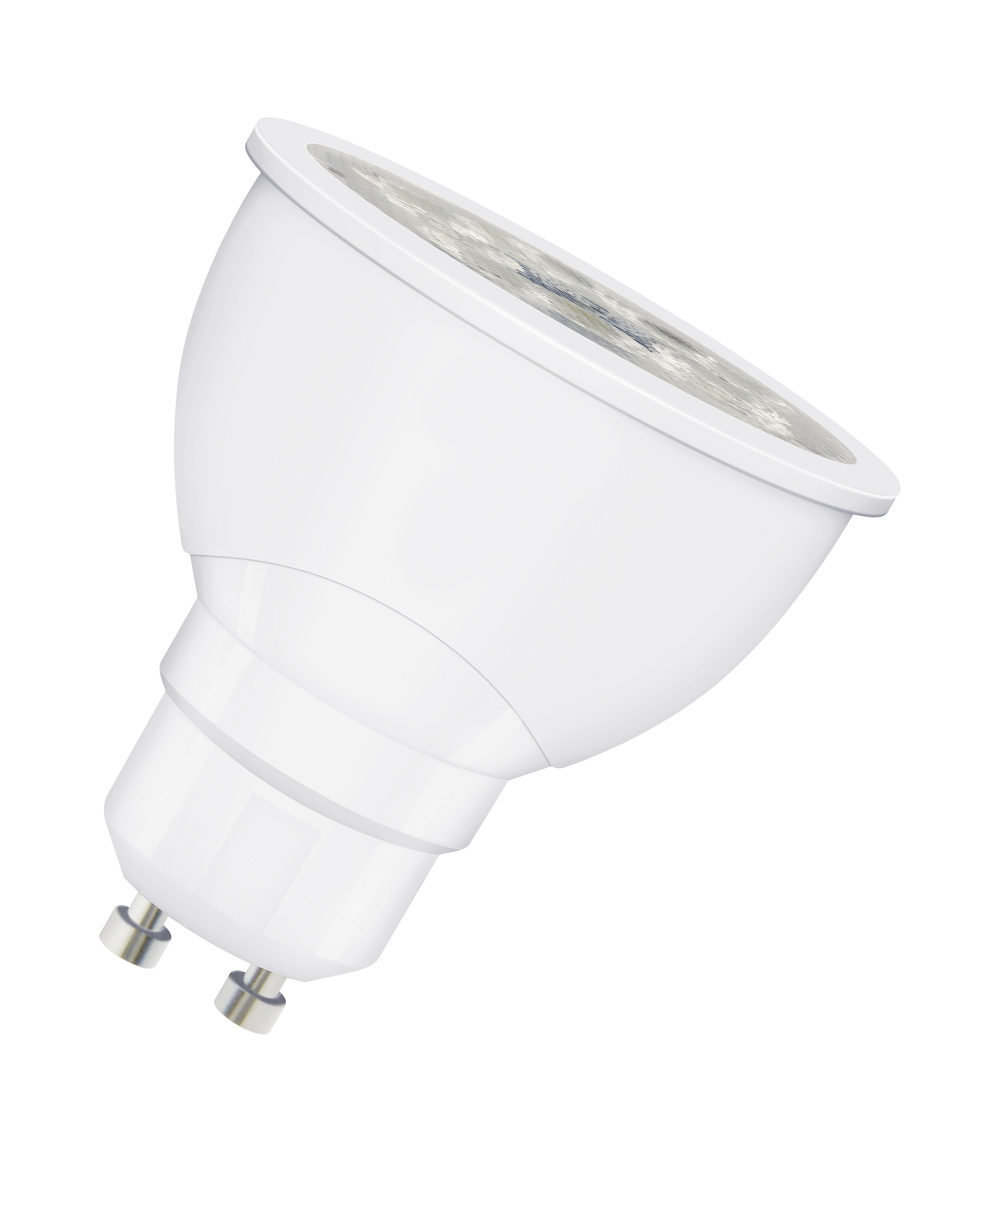 Ledvance LED lamp SMART+ Spot GU10 Multicolour 4.9 W 220...240 V 120 ° GU10